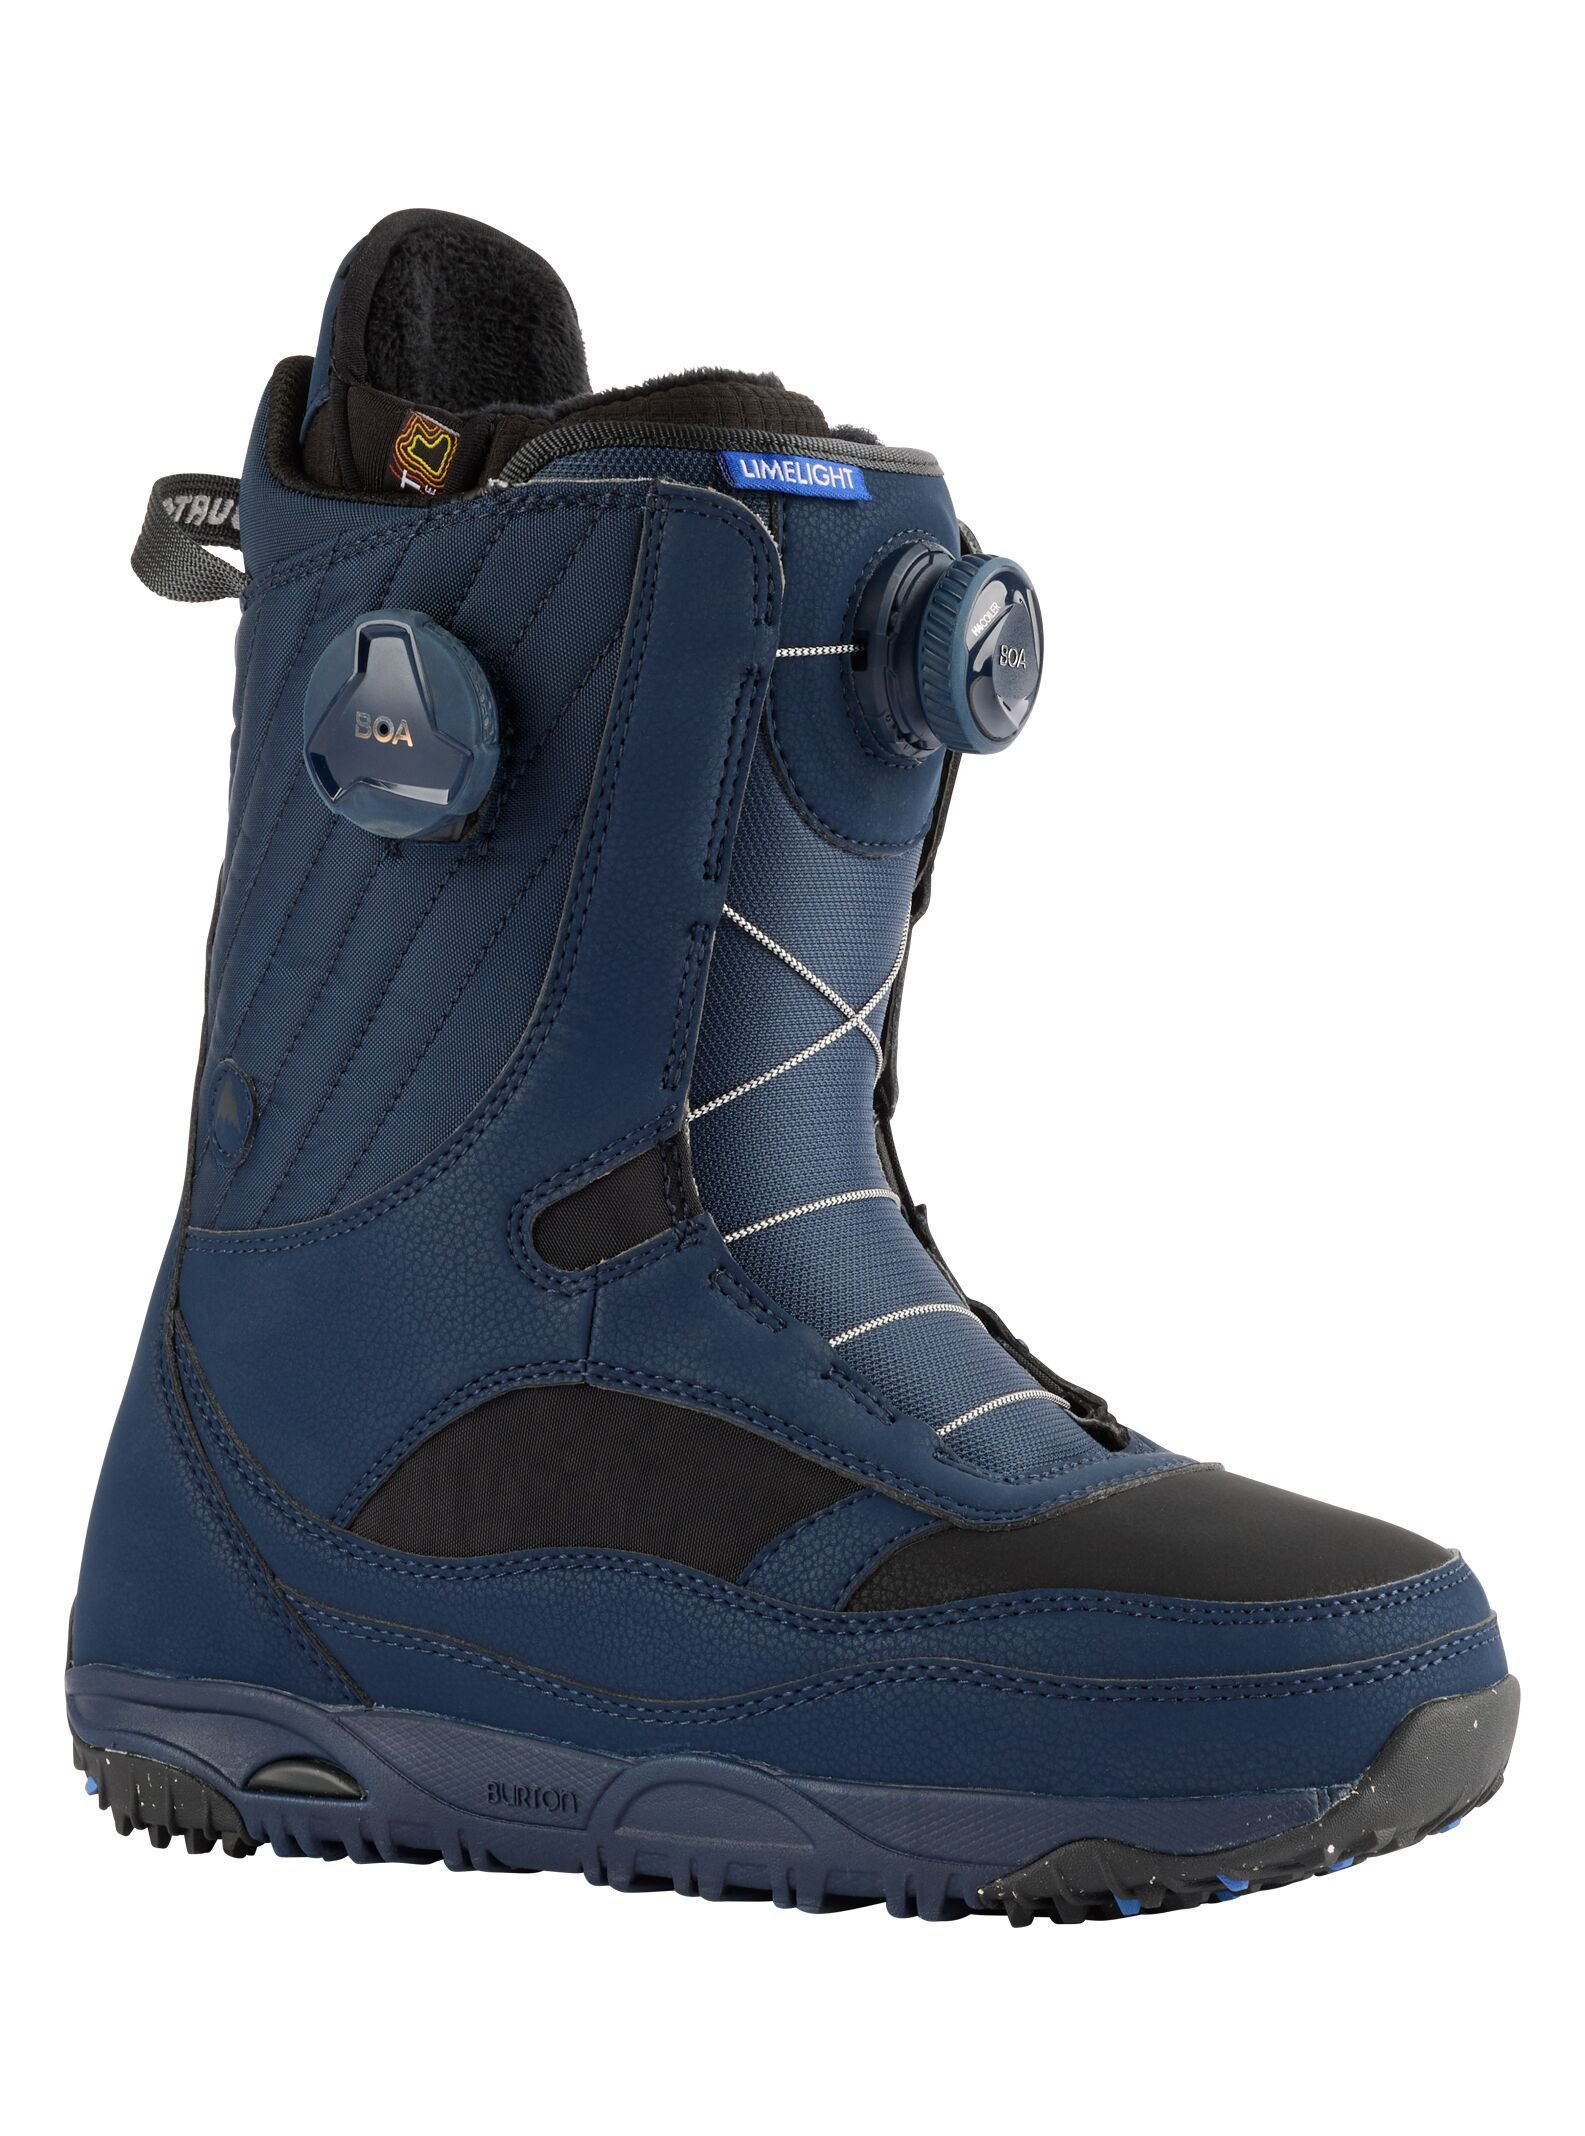 Women’s Limelight BOA®︎ Snowboard Boots - Wide